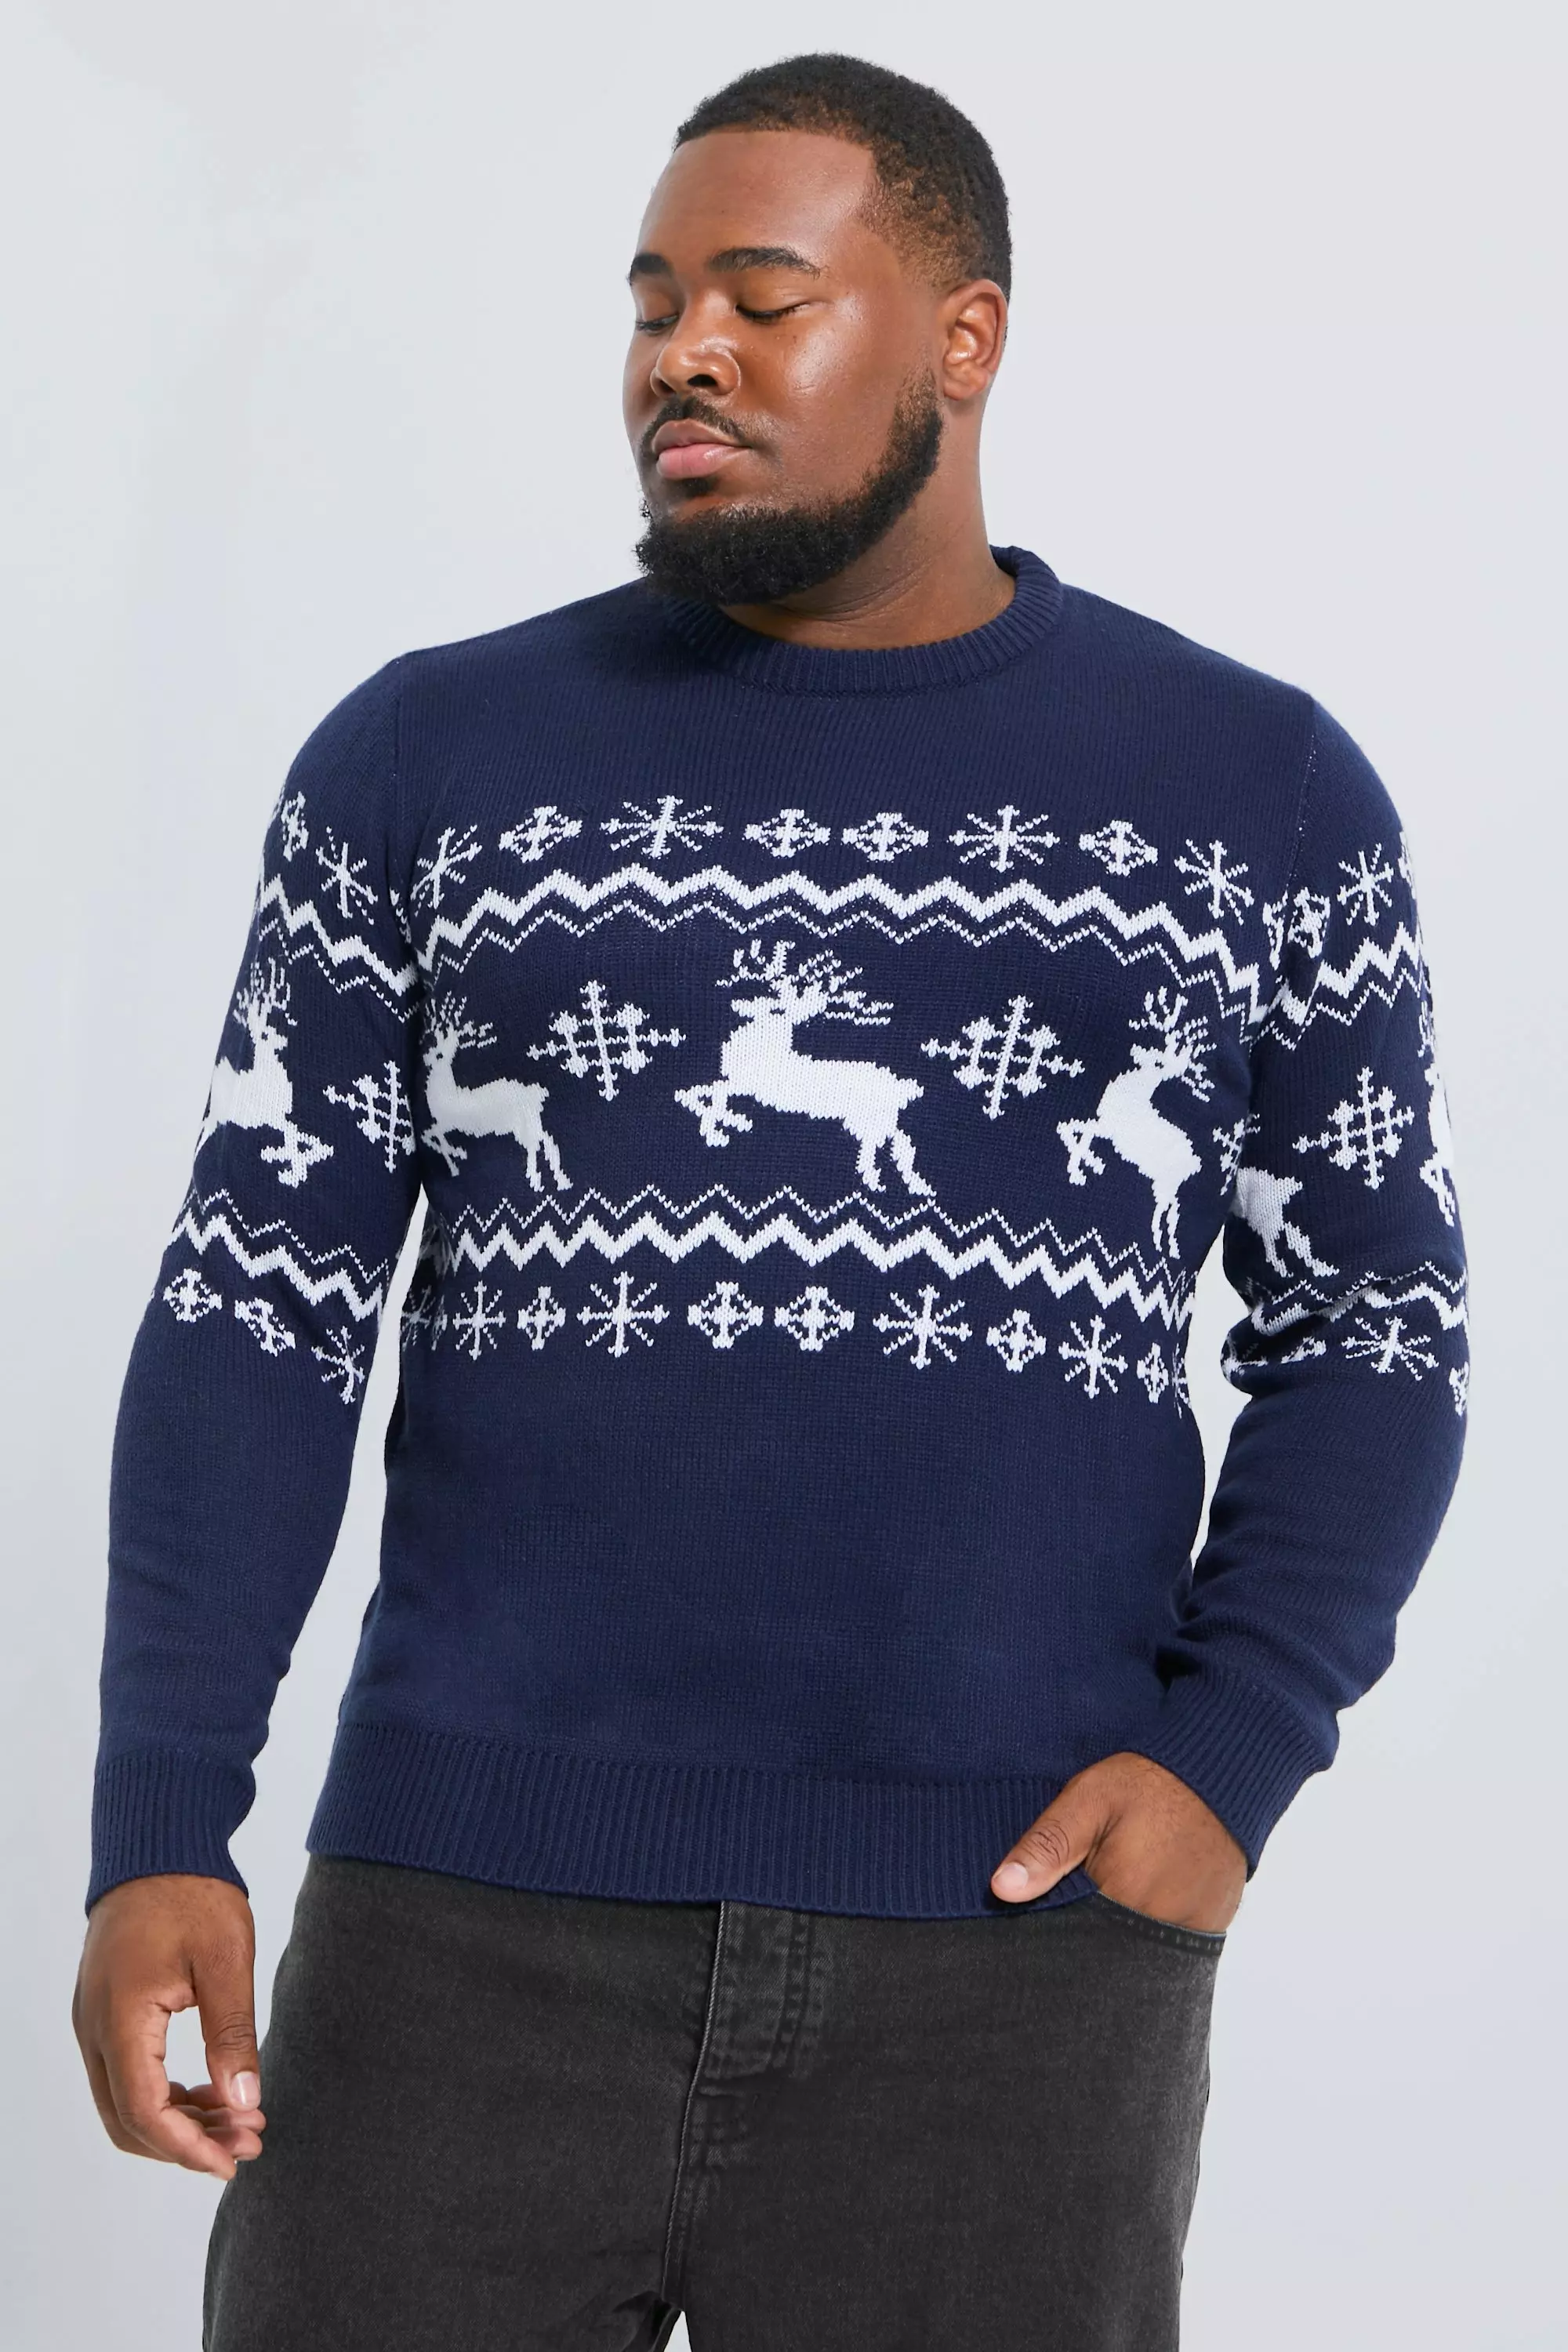 Plus Reindeer Fairisle Panel Christmas Sweater Navy